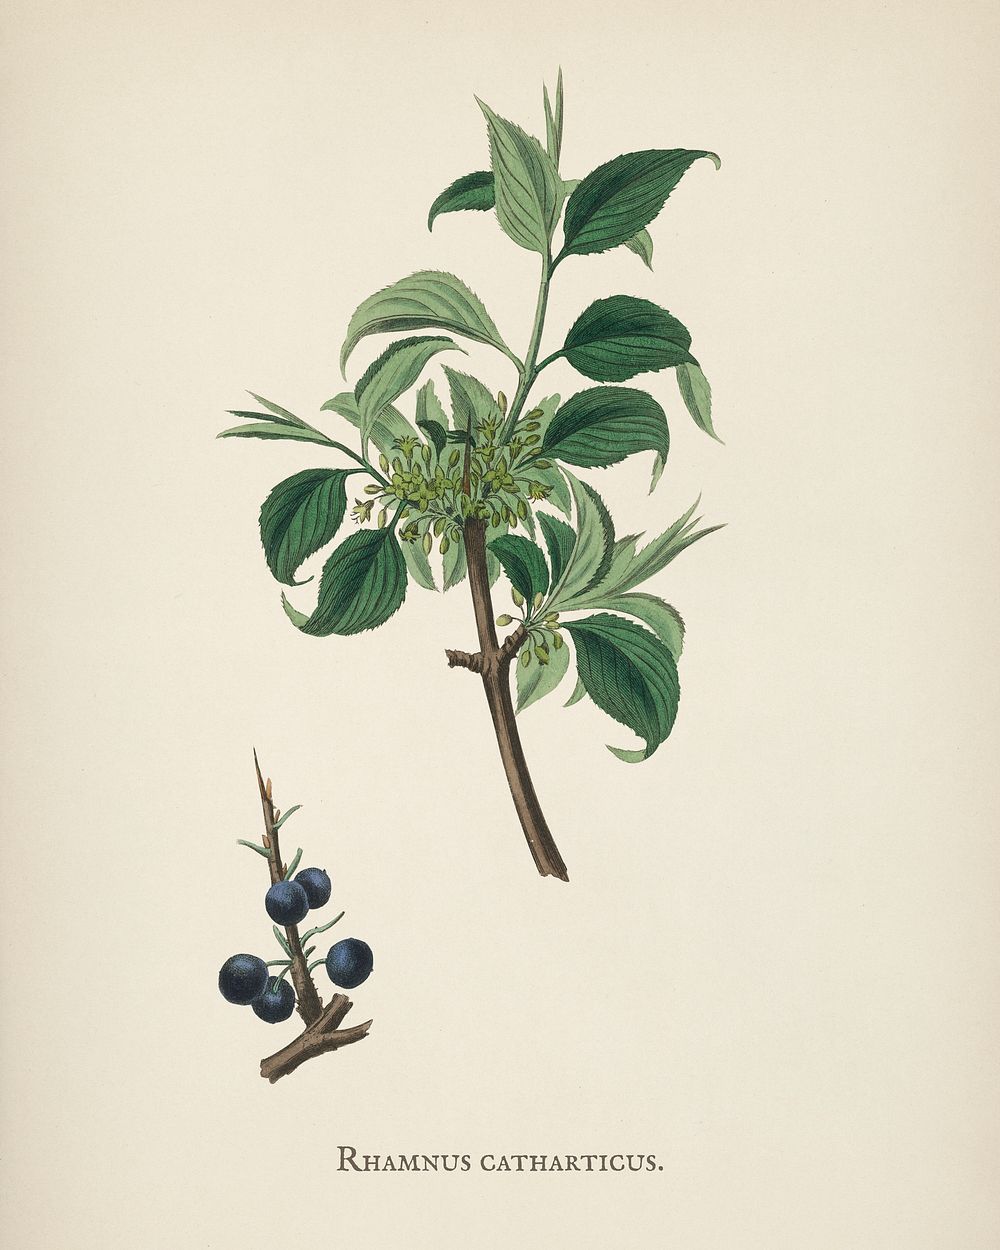 Buckthorn (Rhamnus catharticus) illustration from Medical Botany (1836) by John Stephenson and James Morss Churchill.